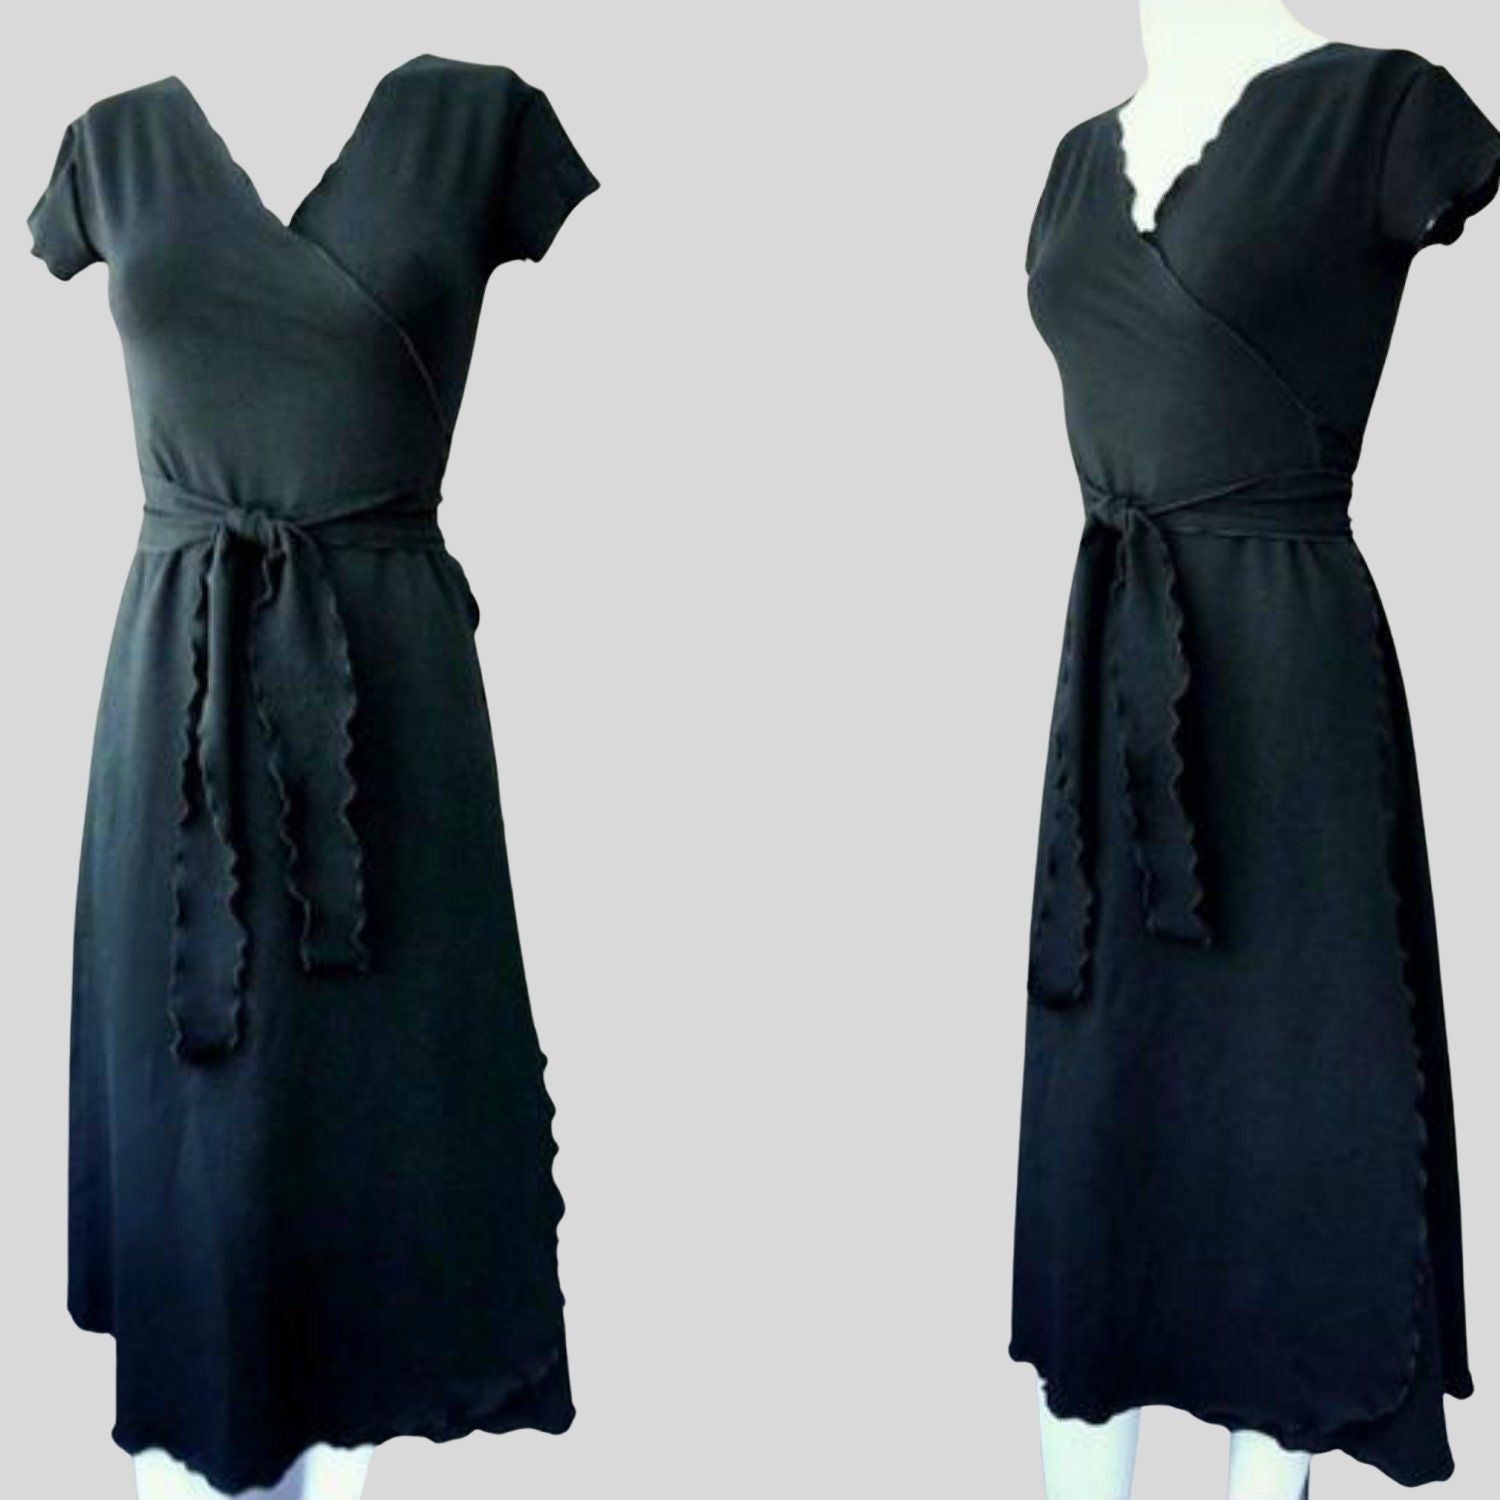 Women's wrap dress with ruffled hem | Shop Women's dresses made in Canada | Canadian women's clothing shop | Buy long black wrap dress